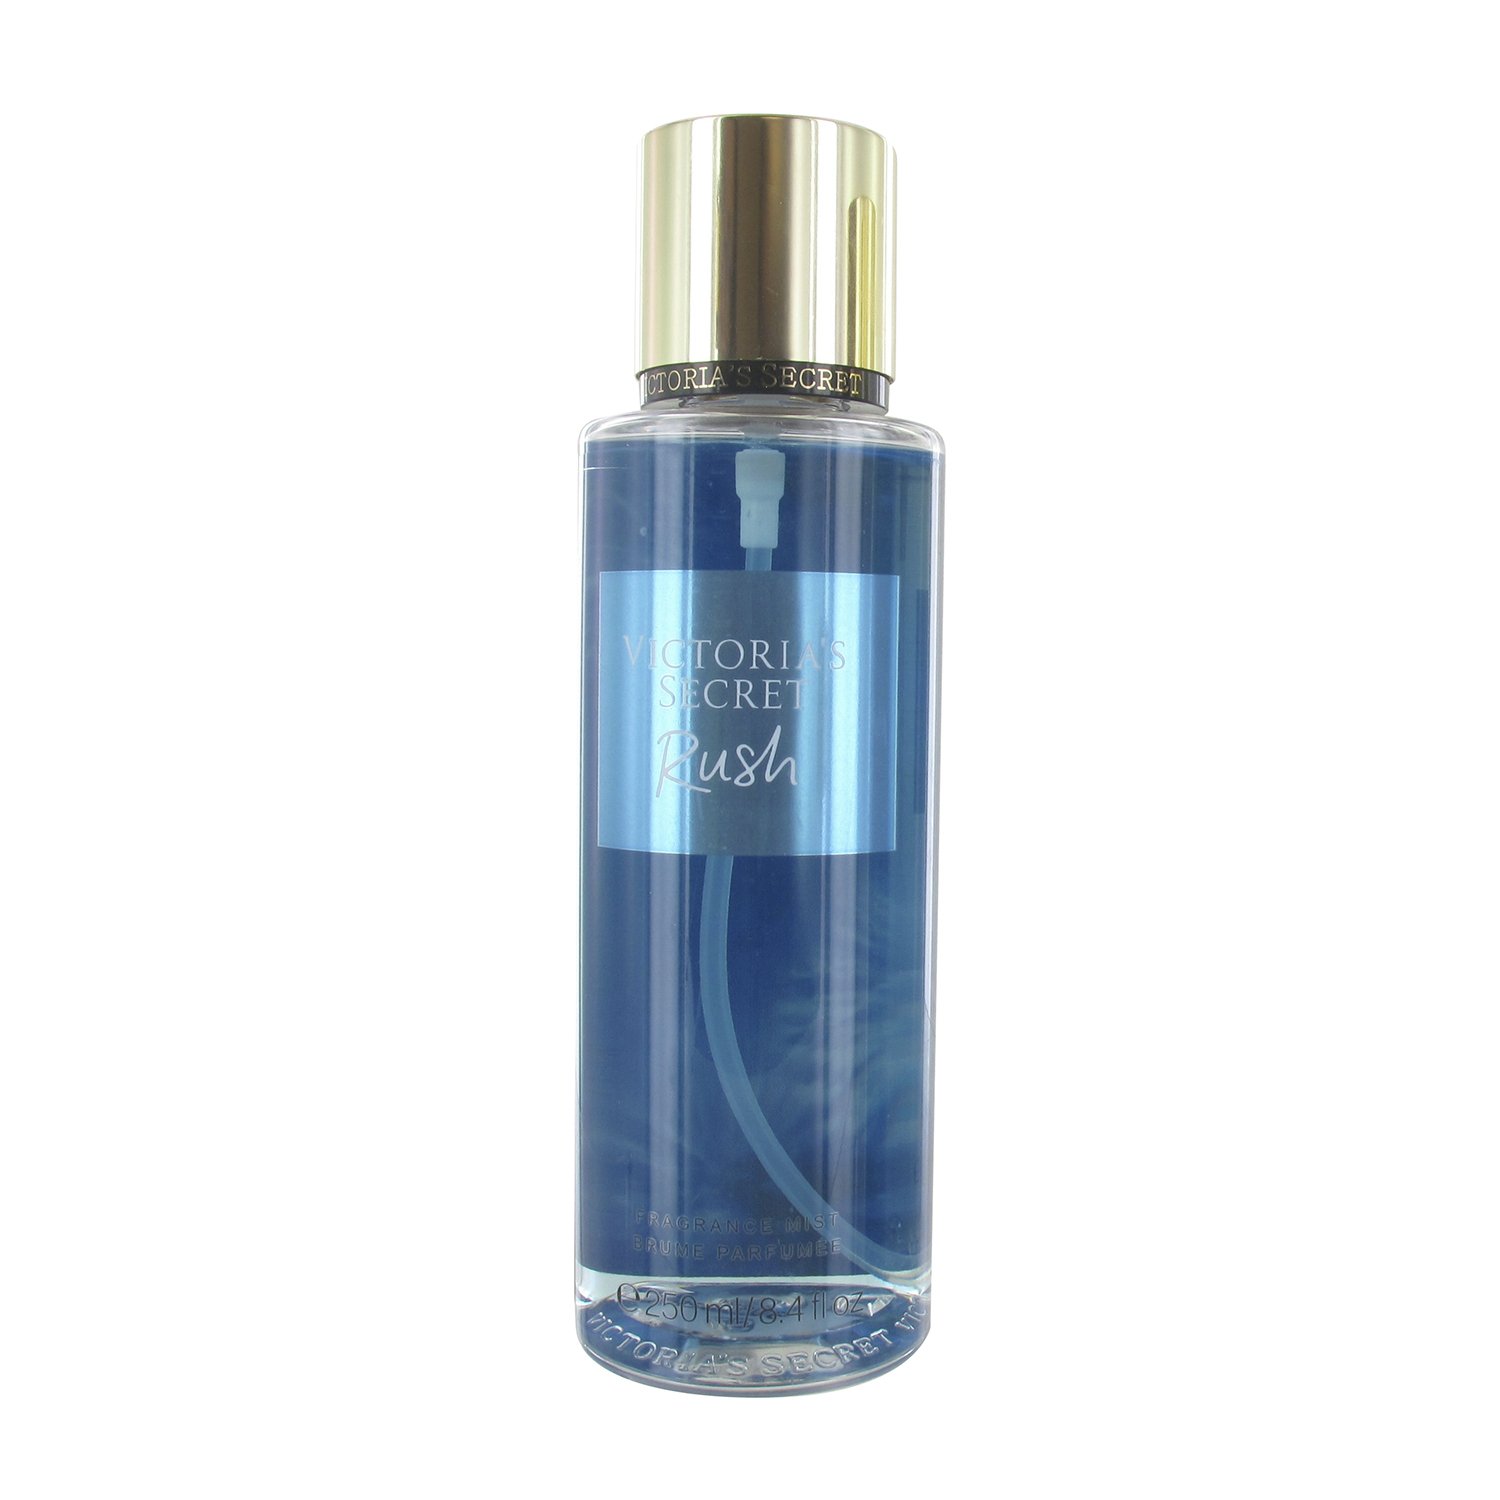 argos light blue perfume